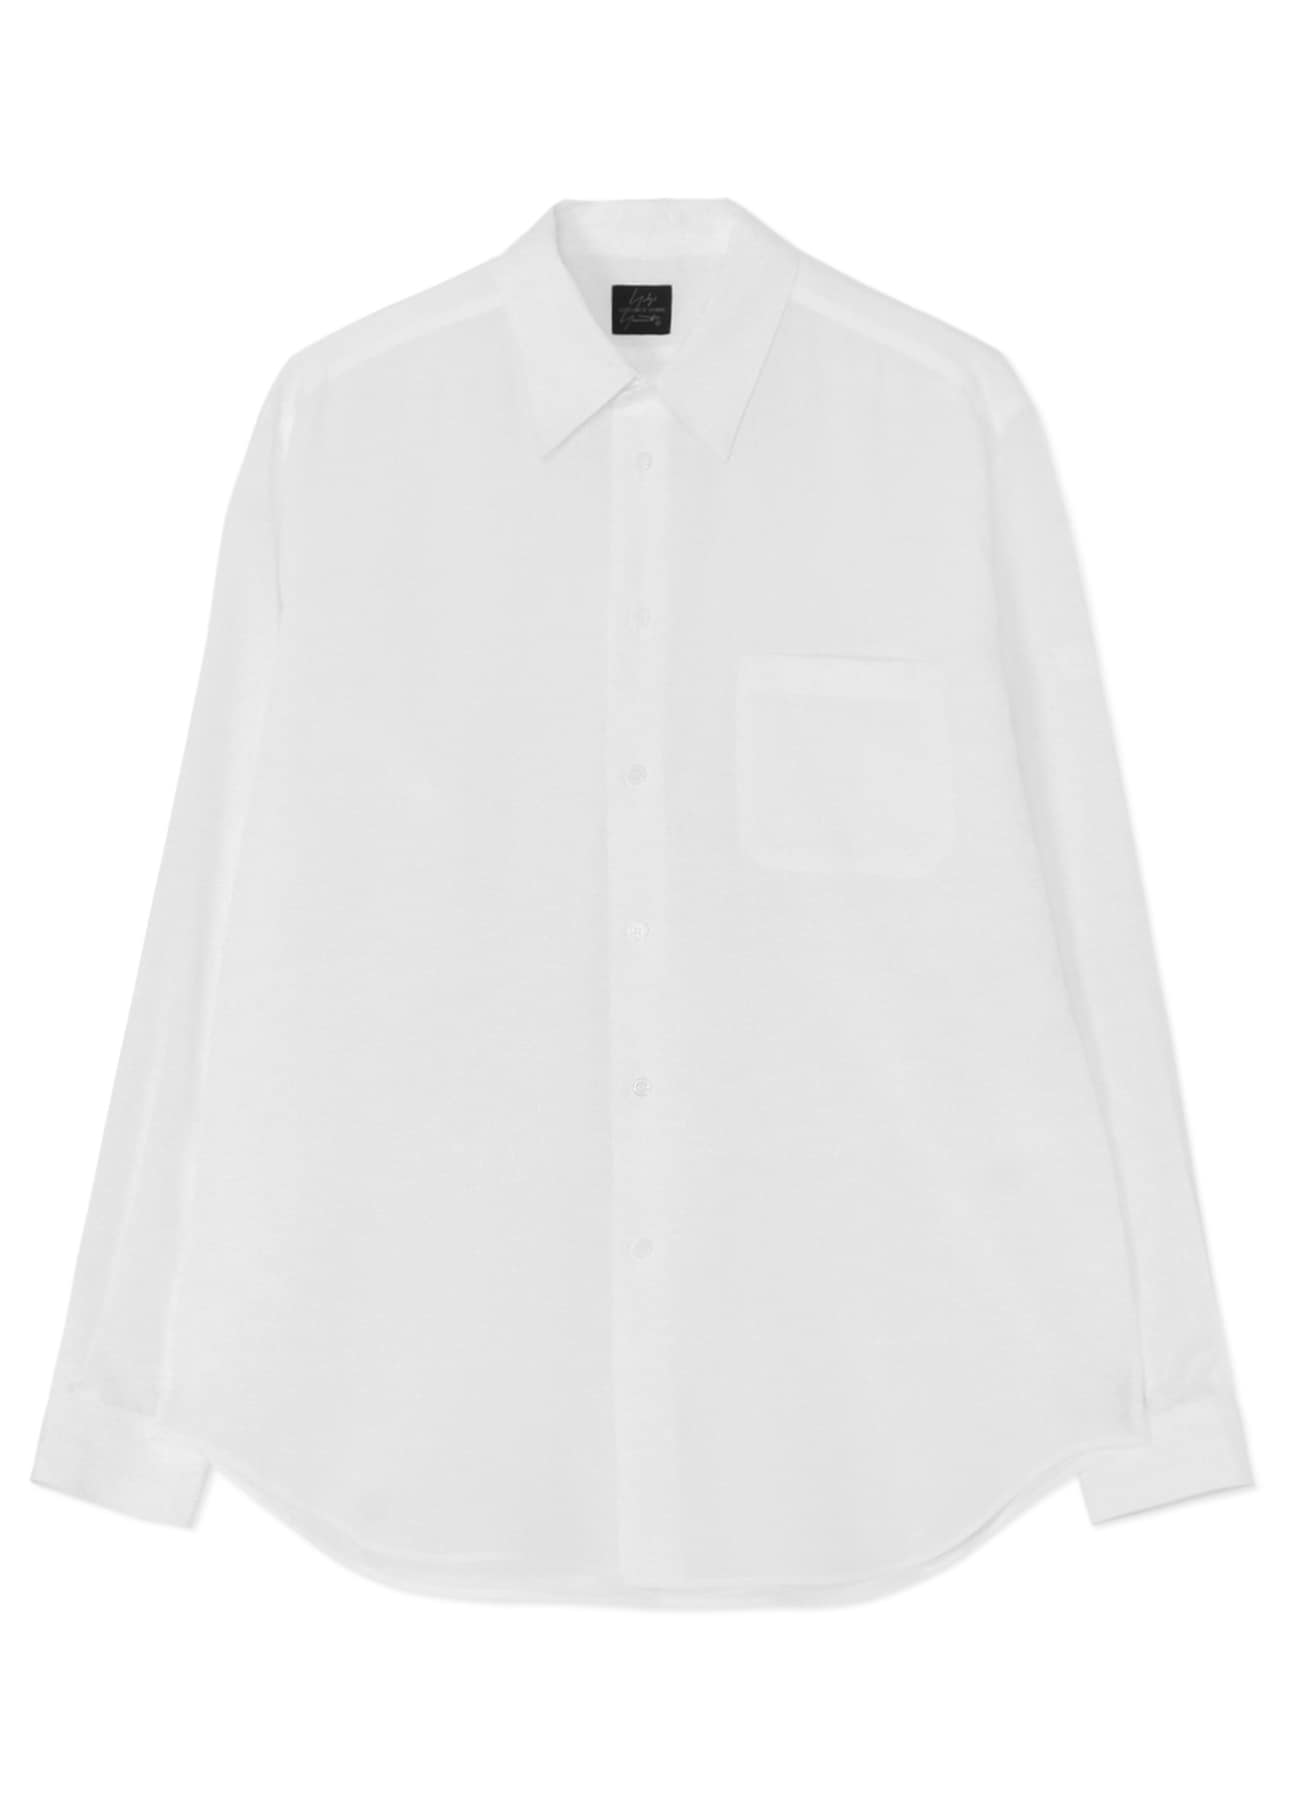 Women's Long Sleeve Mandarin Collar Shirt, White, S